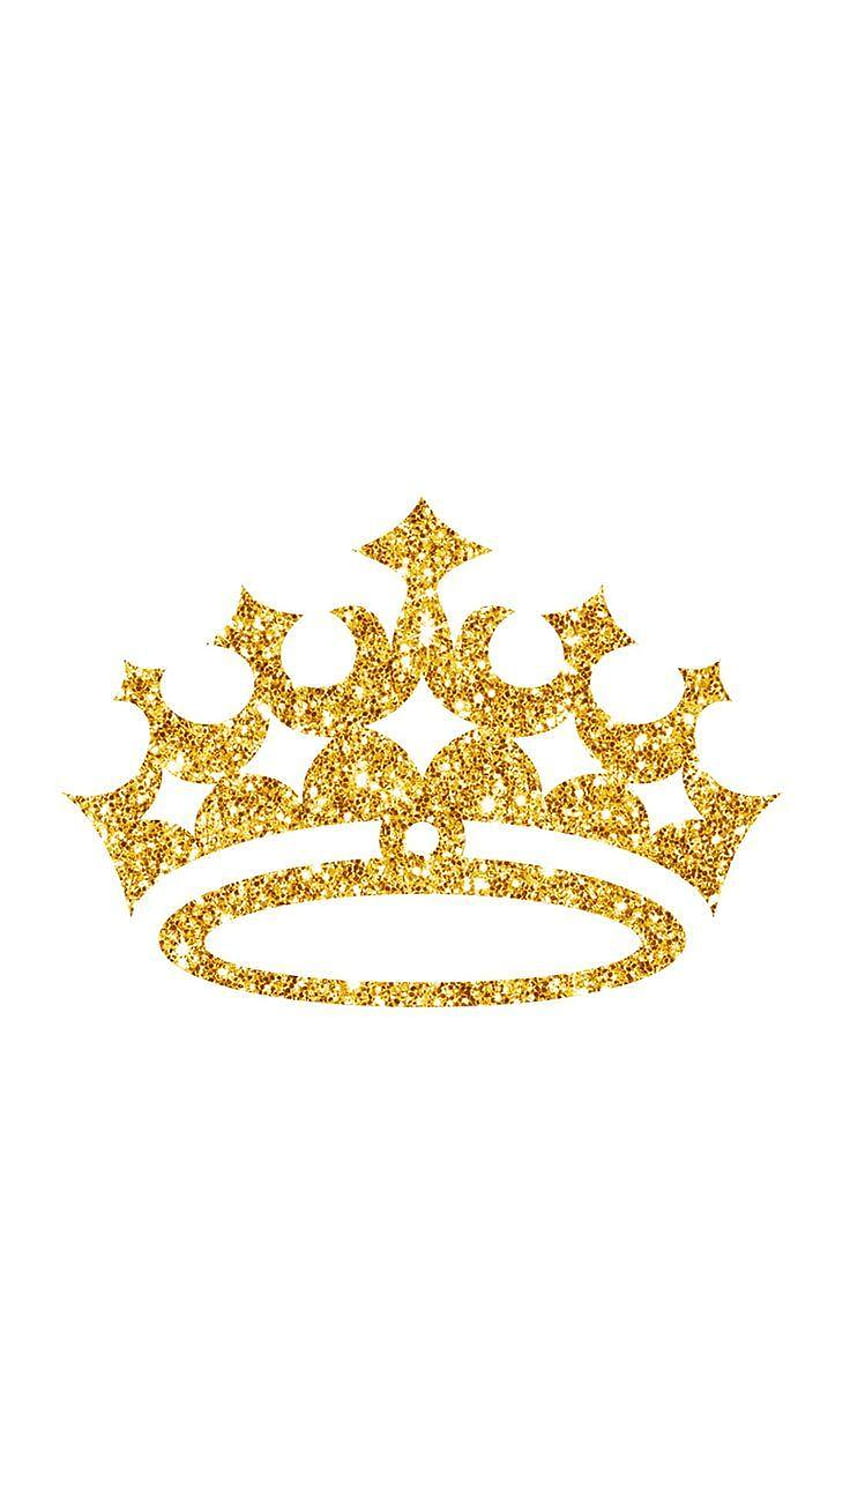 Princess Crown iPhone, gold crown HD phone wallpaper